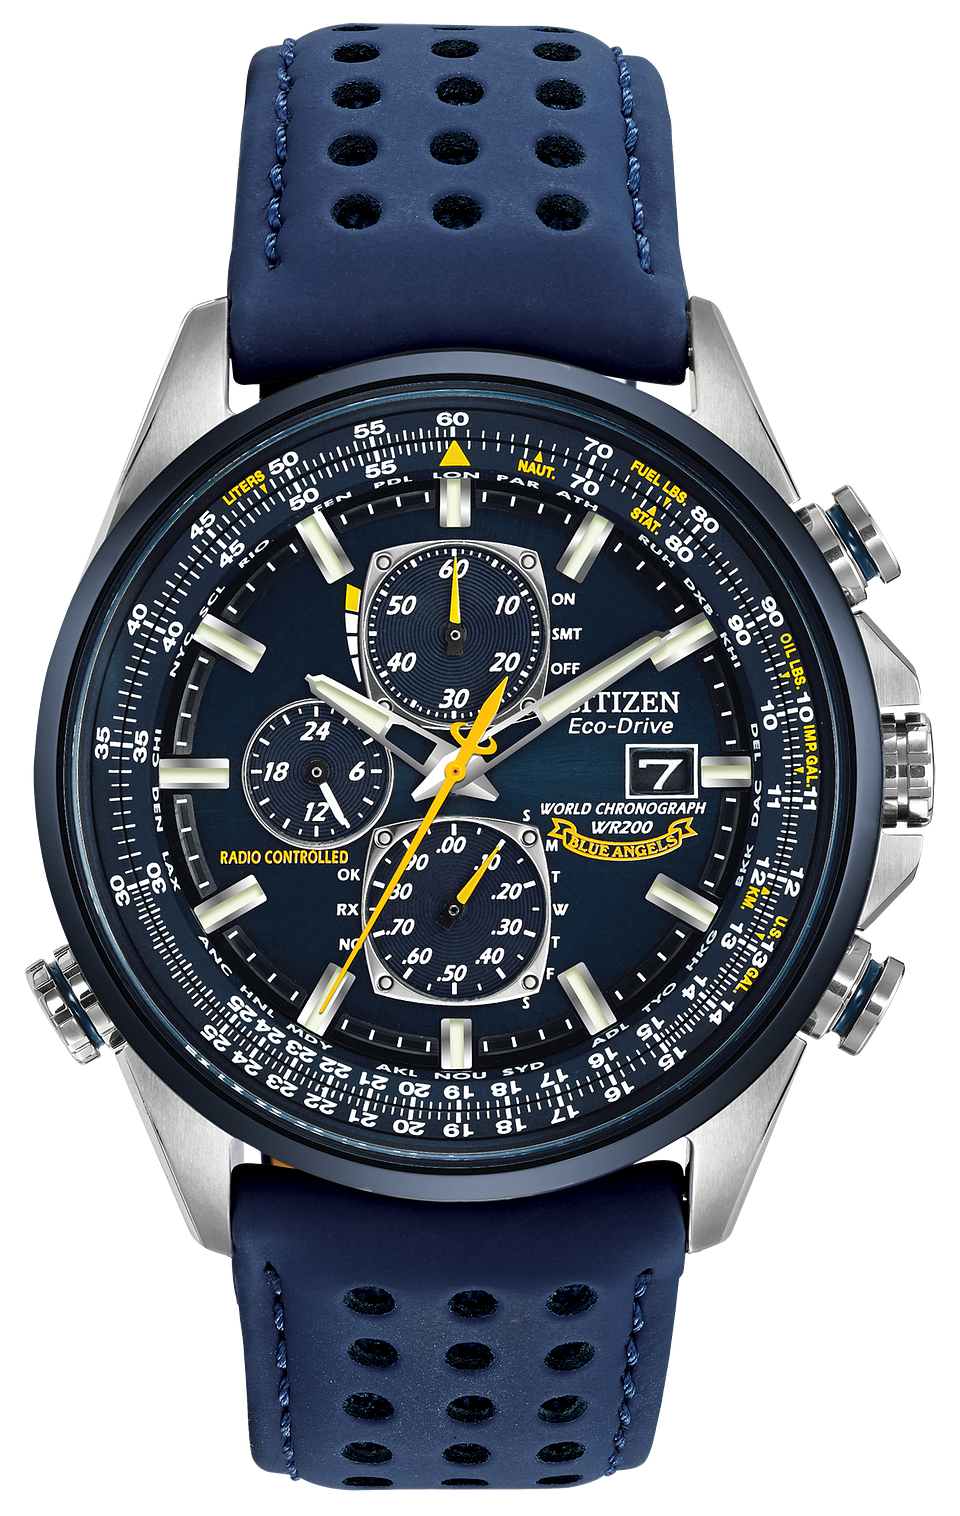 World Chronograph A-T - Men's Eco-Drive AT8020-03L Blue Watch | Citizen